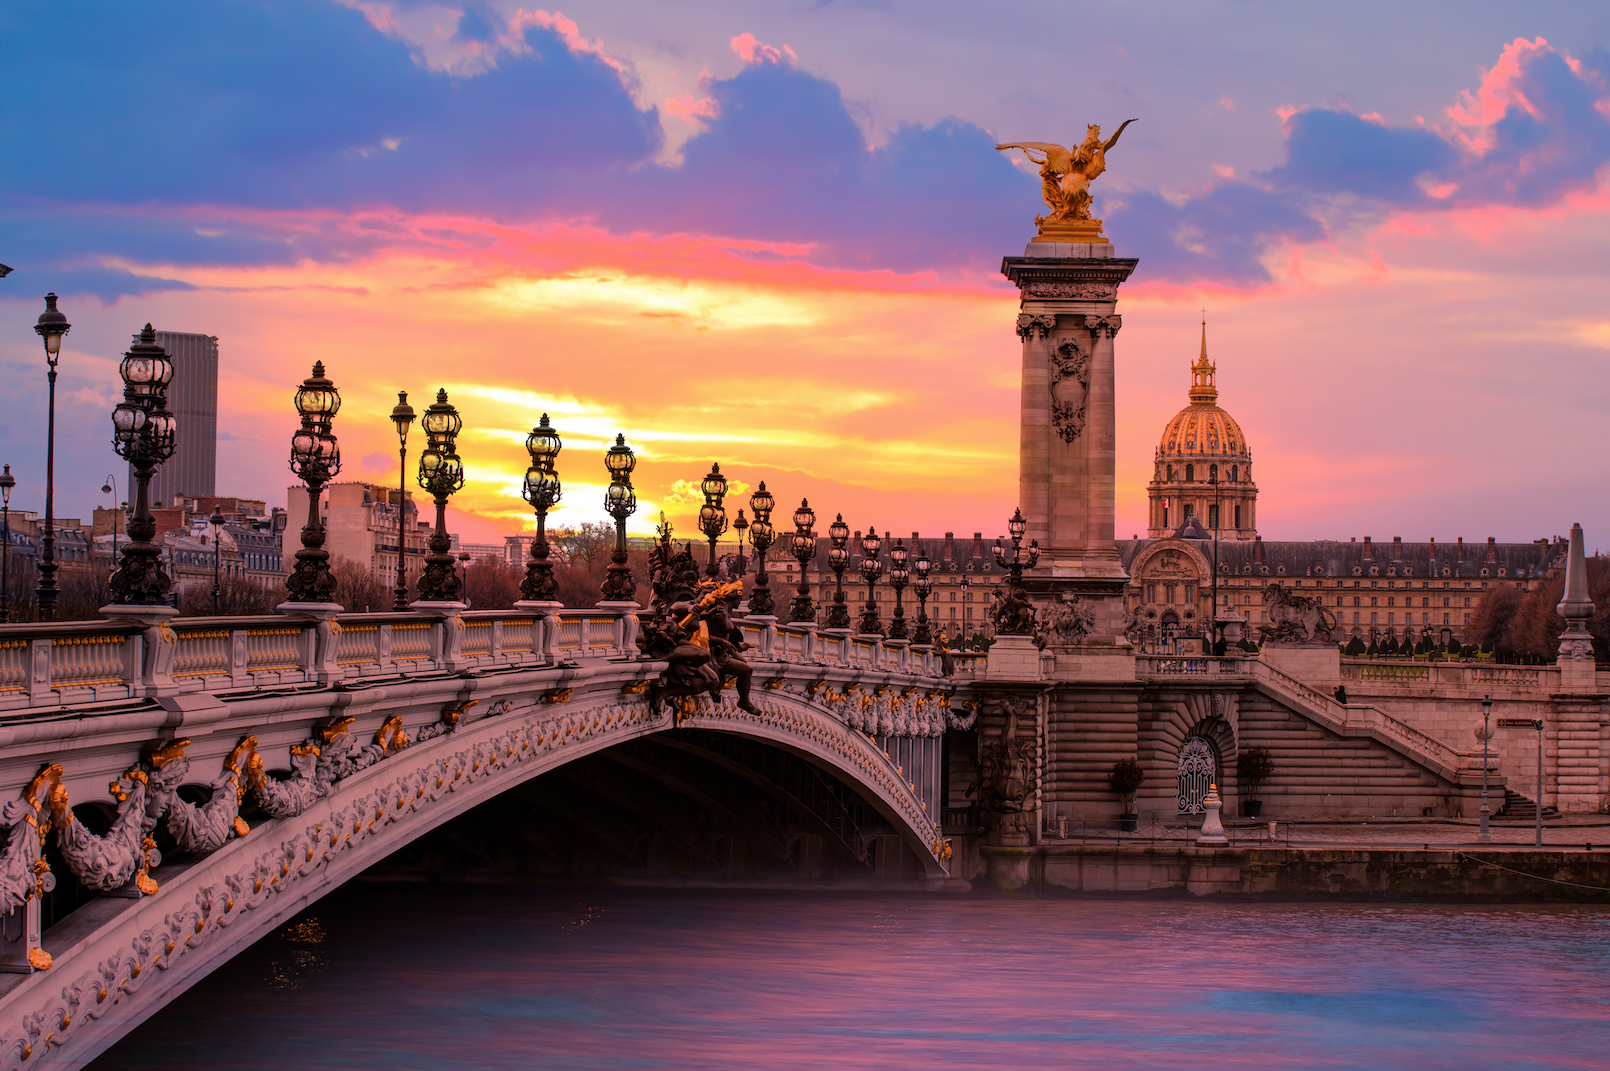 Sunset with view of a Paris bridge.